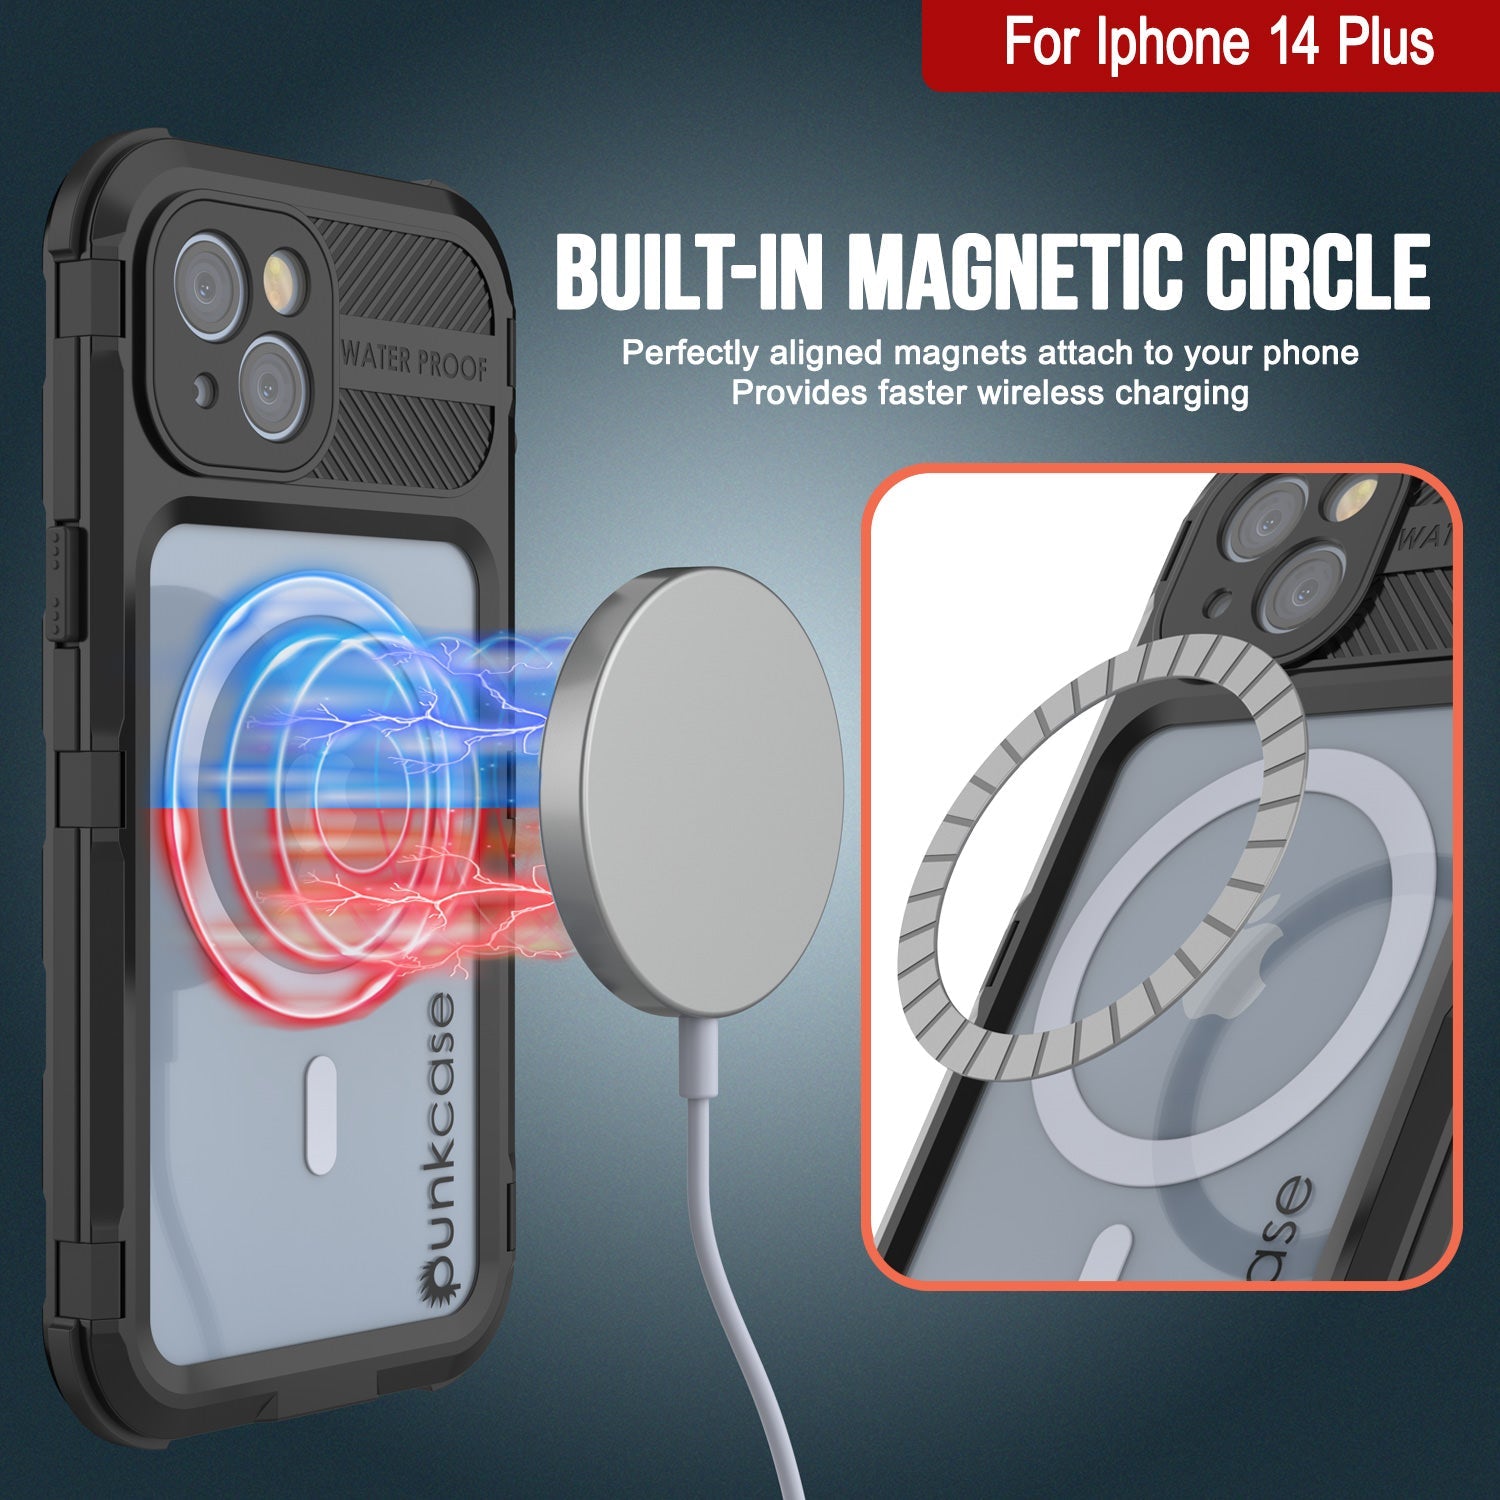 iPhone 14 Plus Metal Extreme 2.0 Series Aluminum Waterproof Case IP68 W/Buillt in Screen Protector [Black]